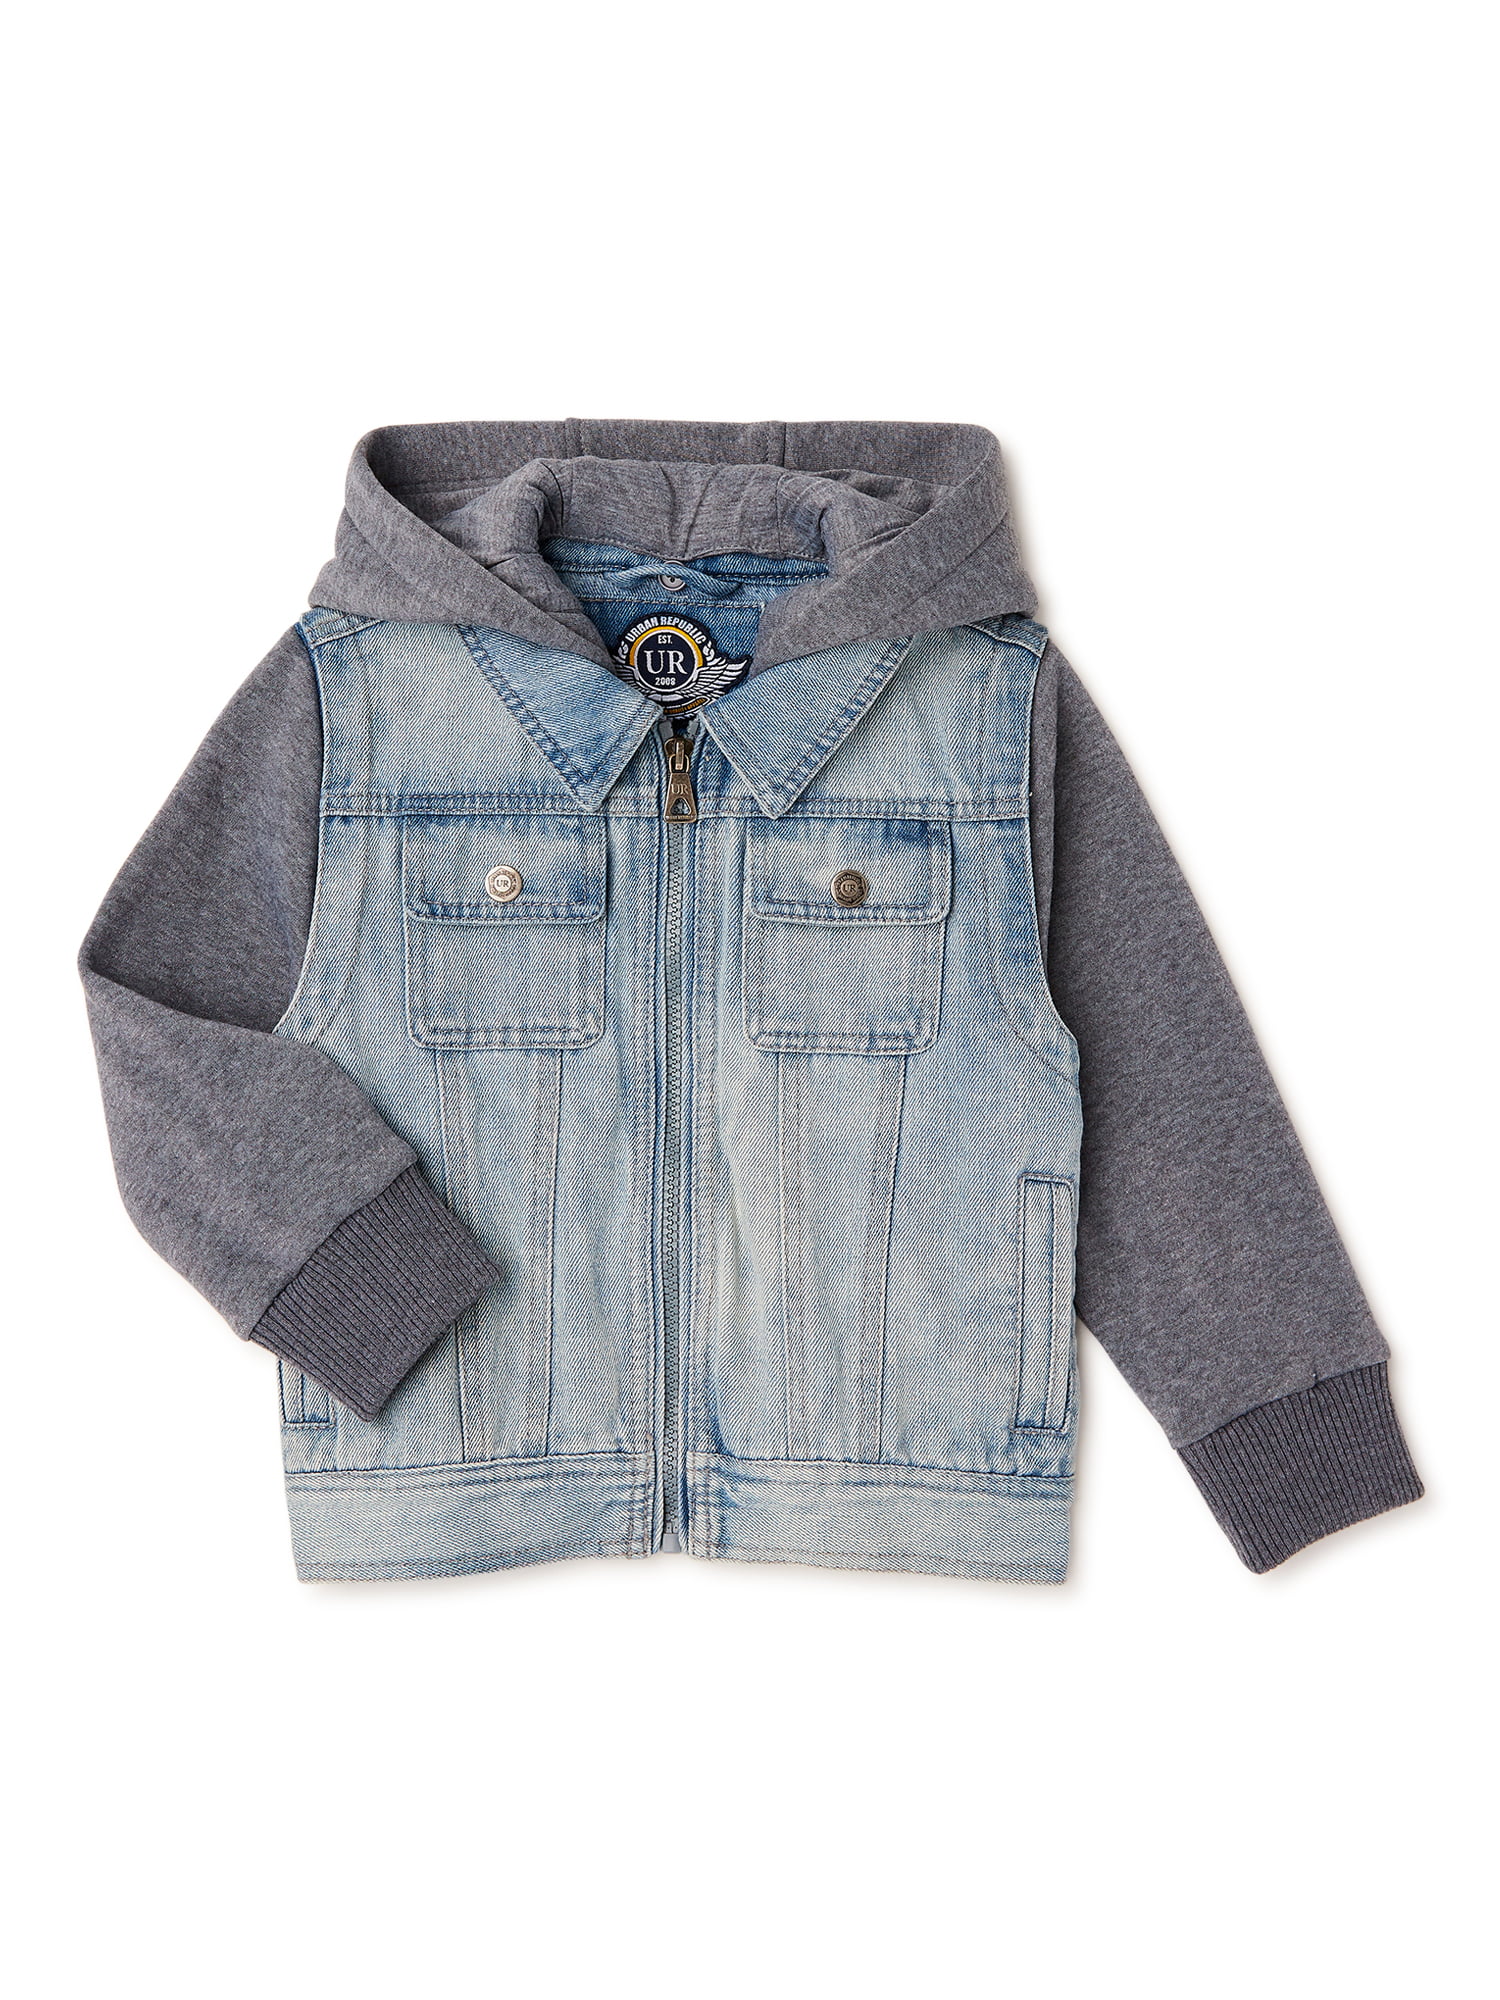 Urban Republic Baby & Toddler Boys Cotton Denim Jacket, Sizes 3M-4T -  